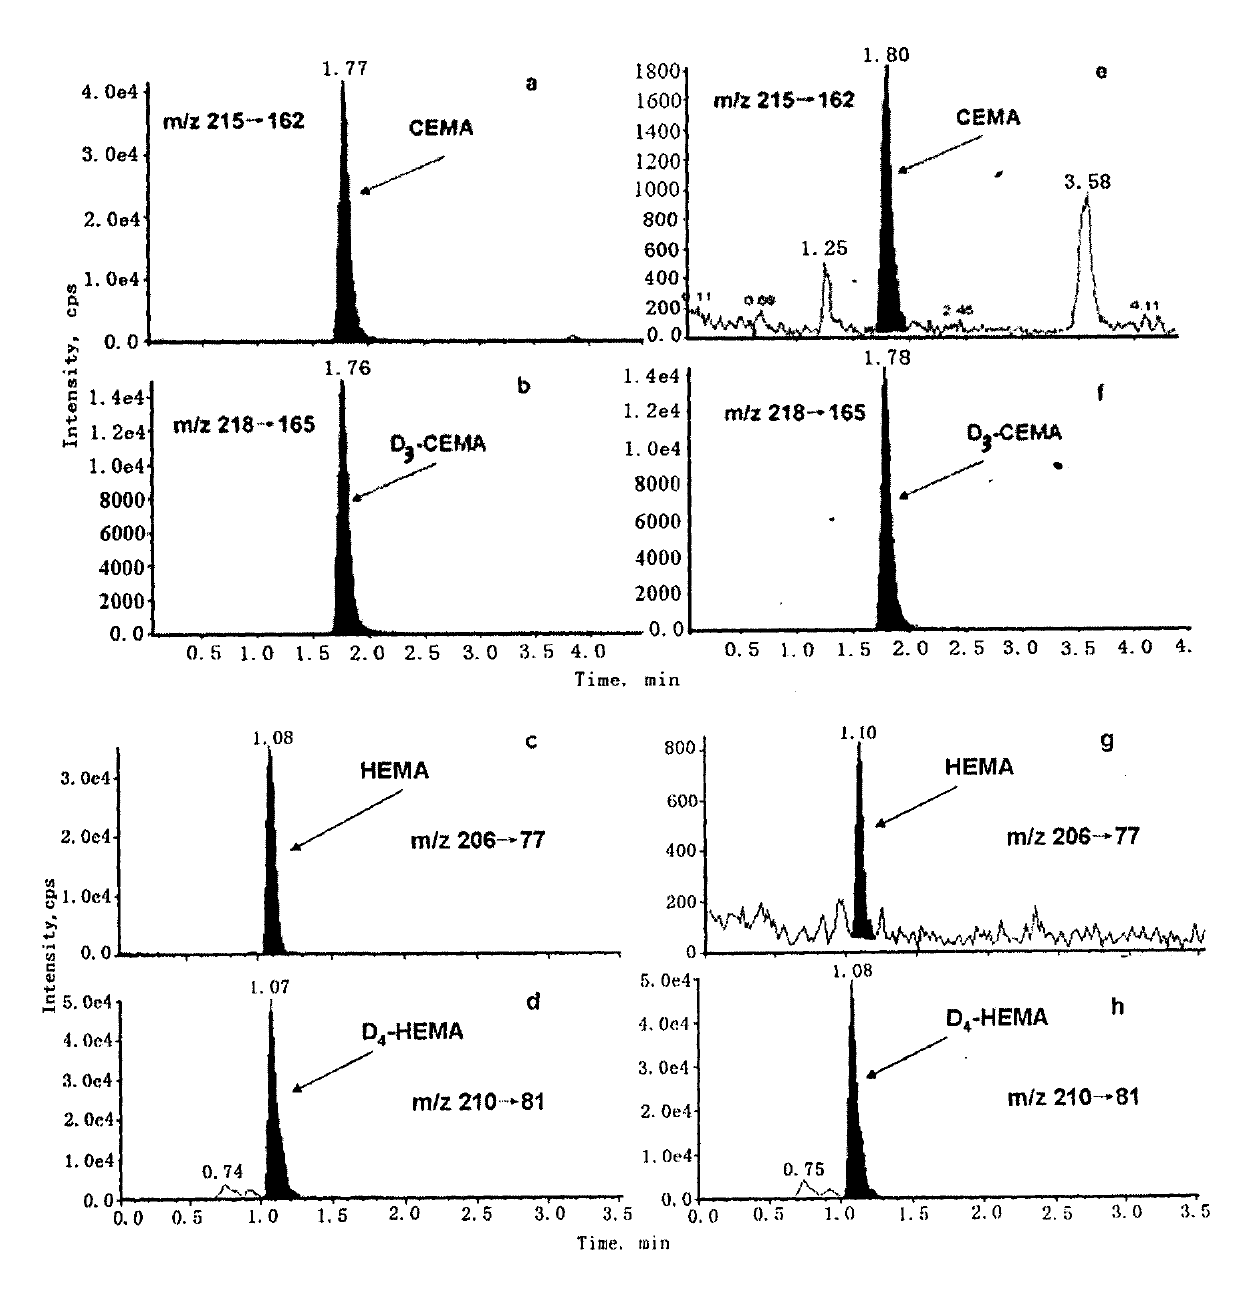 Liquid-chromatogram and tandem-mass-spectrogram assay method for CEMA (Cyanoethyl Methacrylate) and HEMA (Hydroxyethyl Methacrylate) in urine